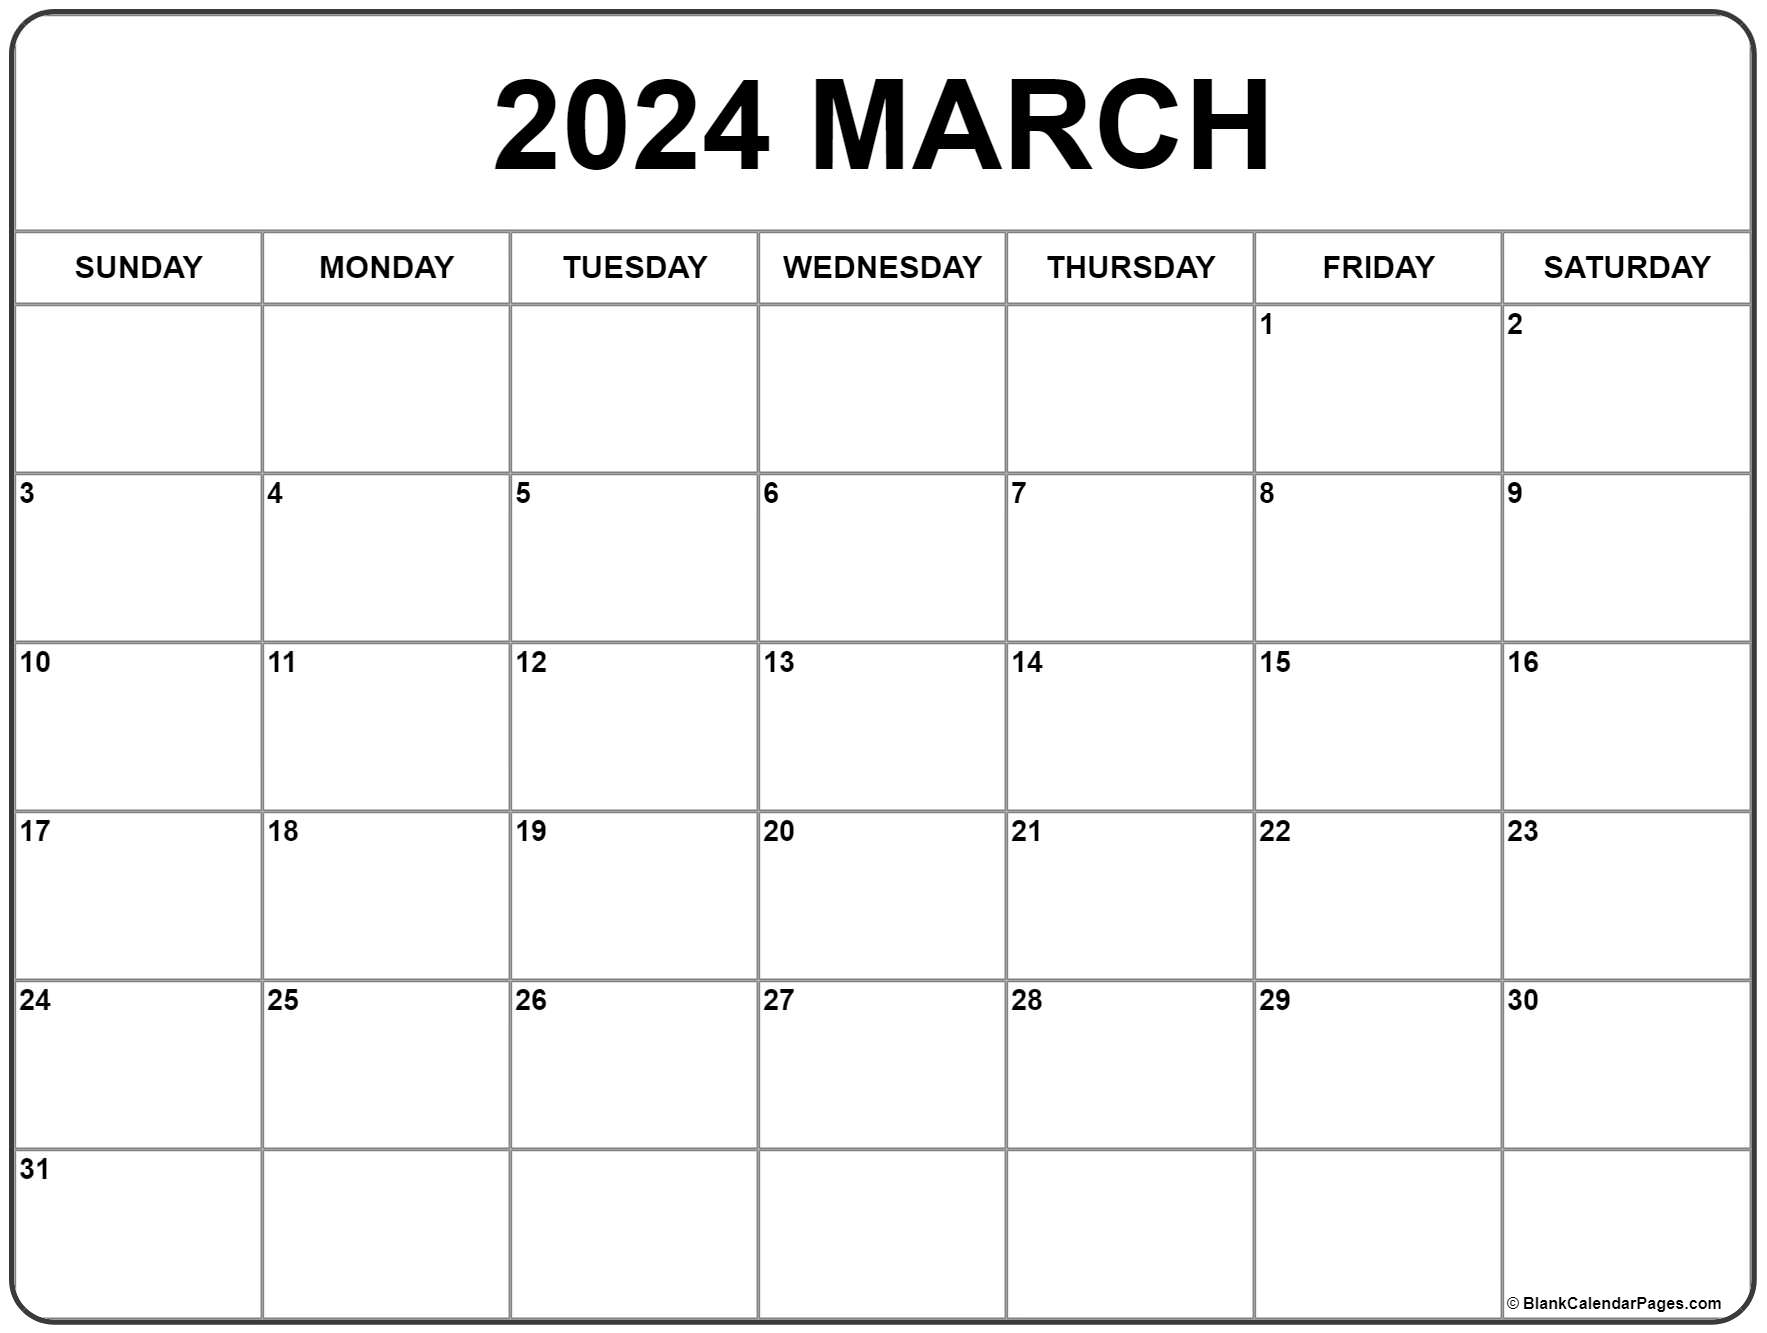 Blank March 2021 Calendar March 2021 calendar | free printable monthly calendars